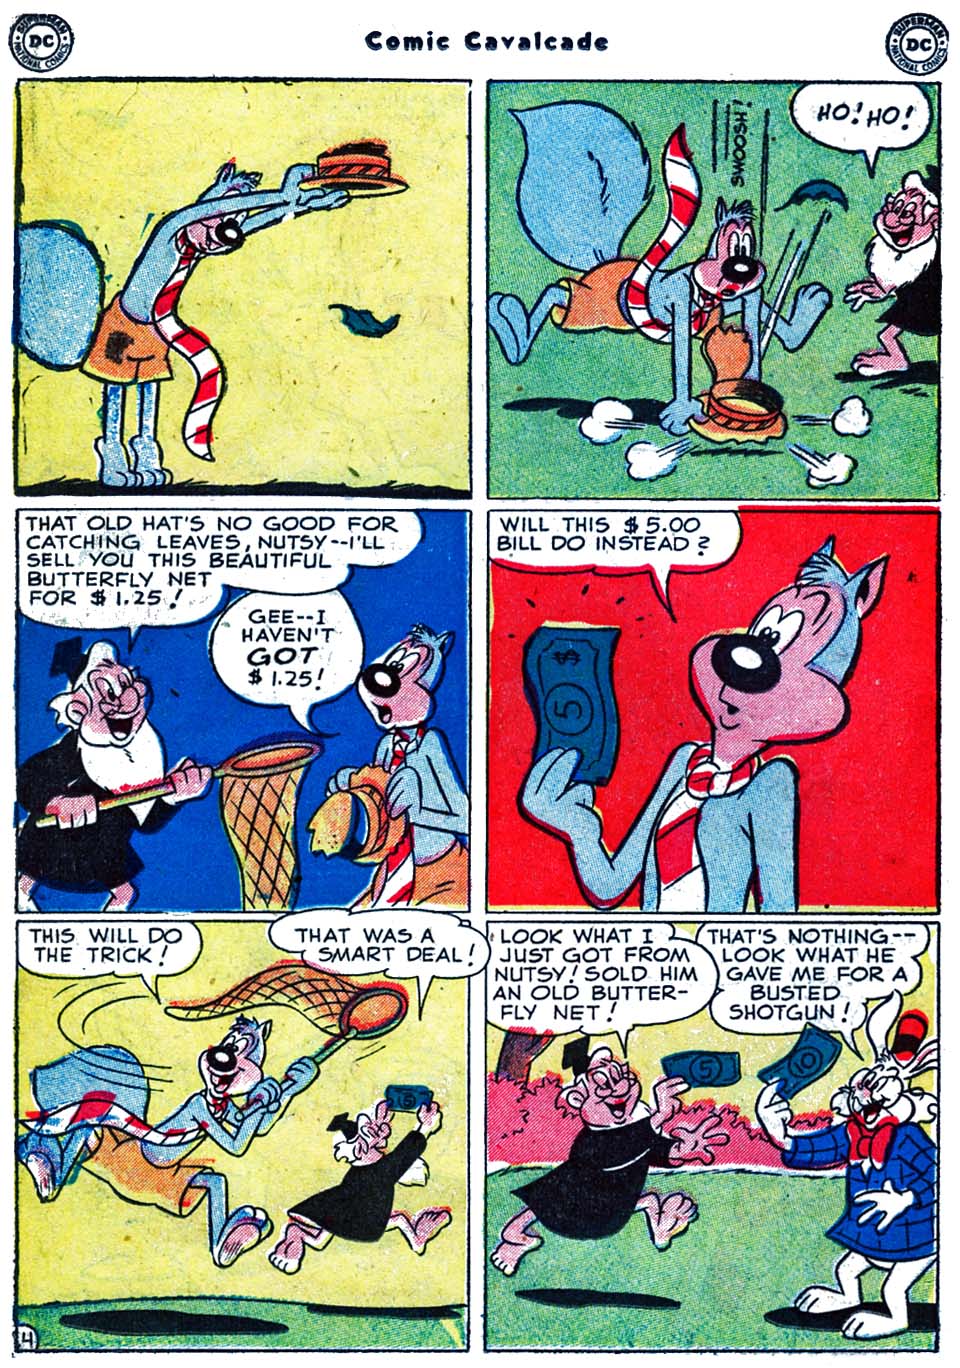 Comic Cavalcade issue 47 - Page 38